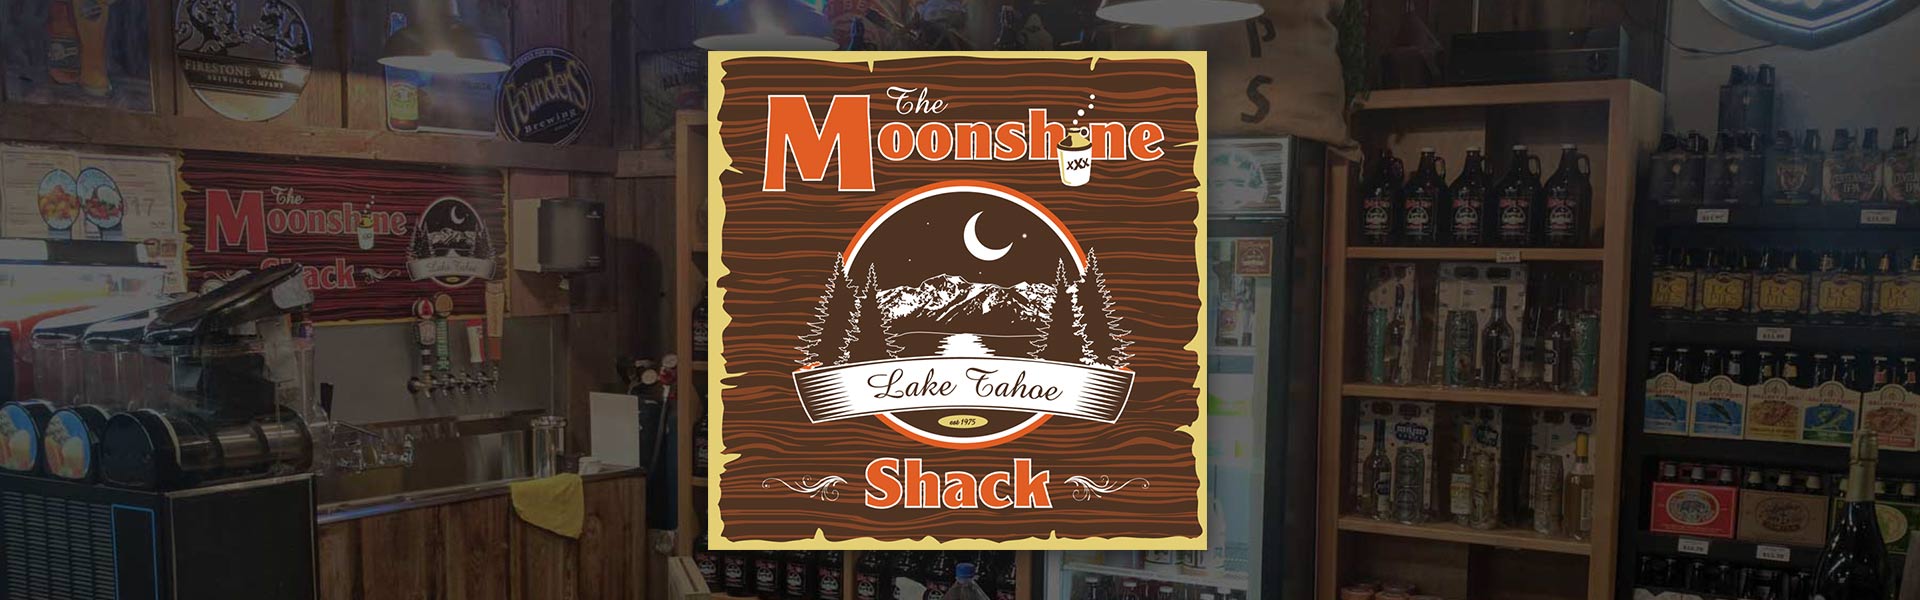 The Moonshine Shack